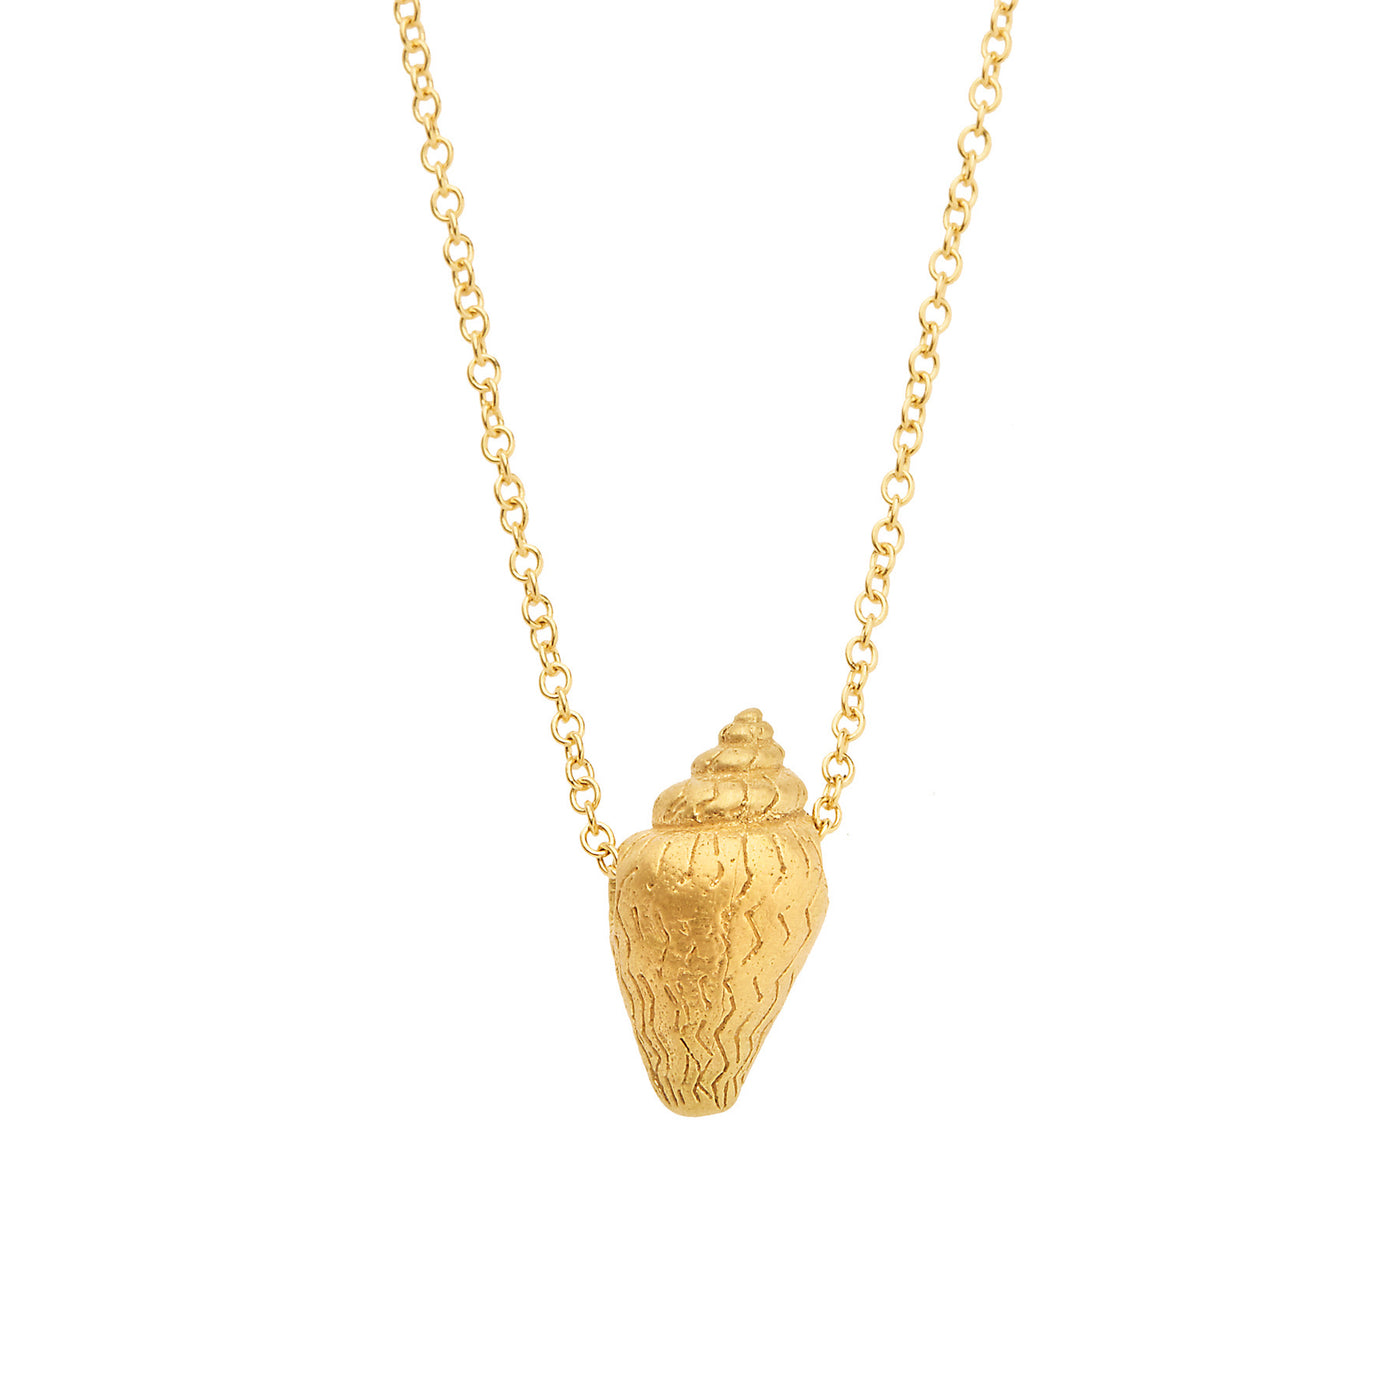 Long Seashell Necklace - Joanna Peters - Ileana Makri store